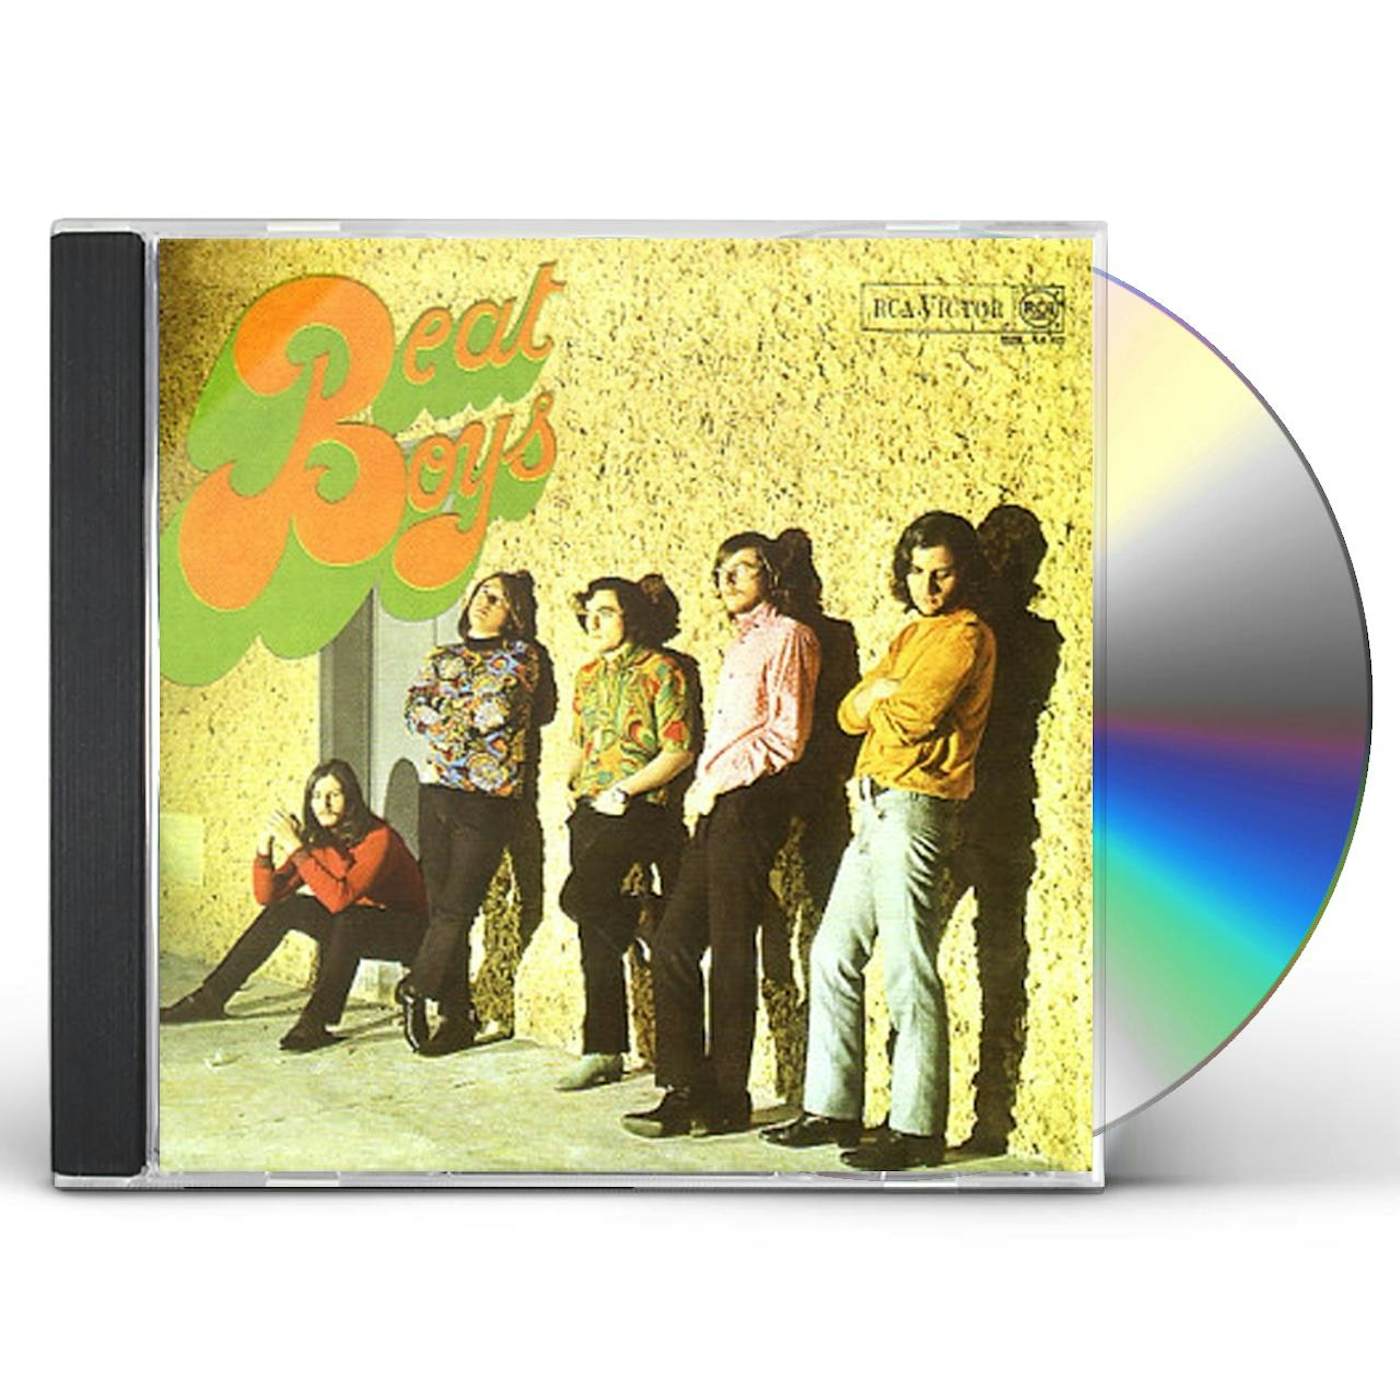 BEAT BOYS CD